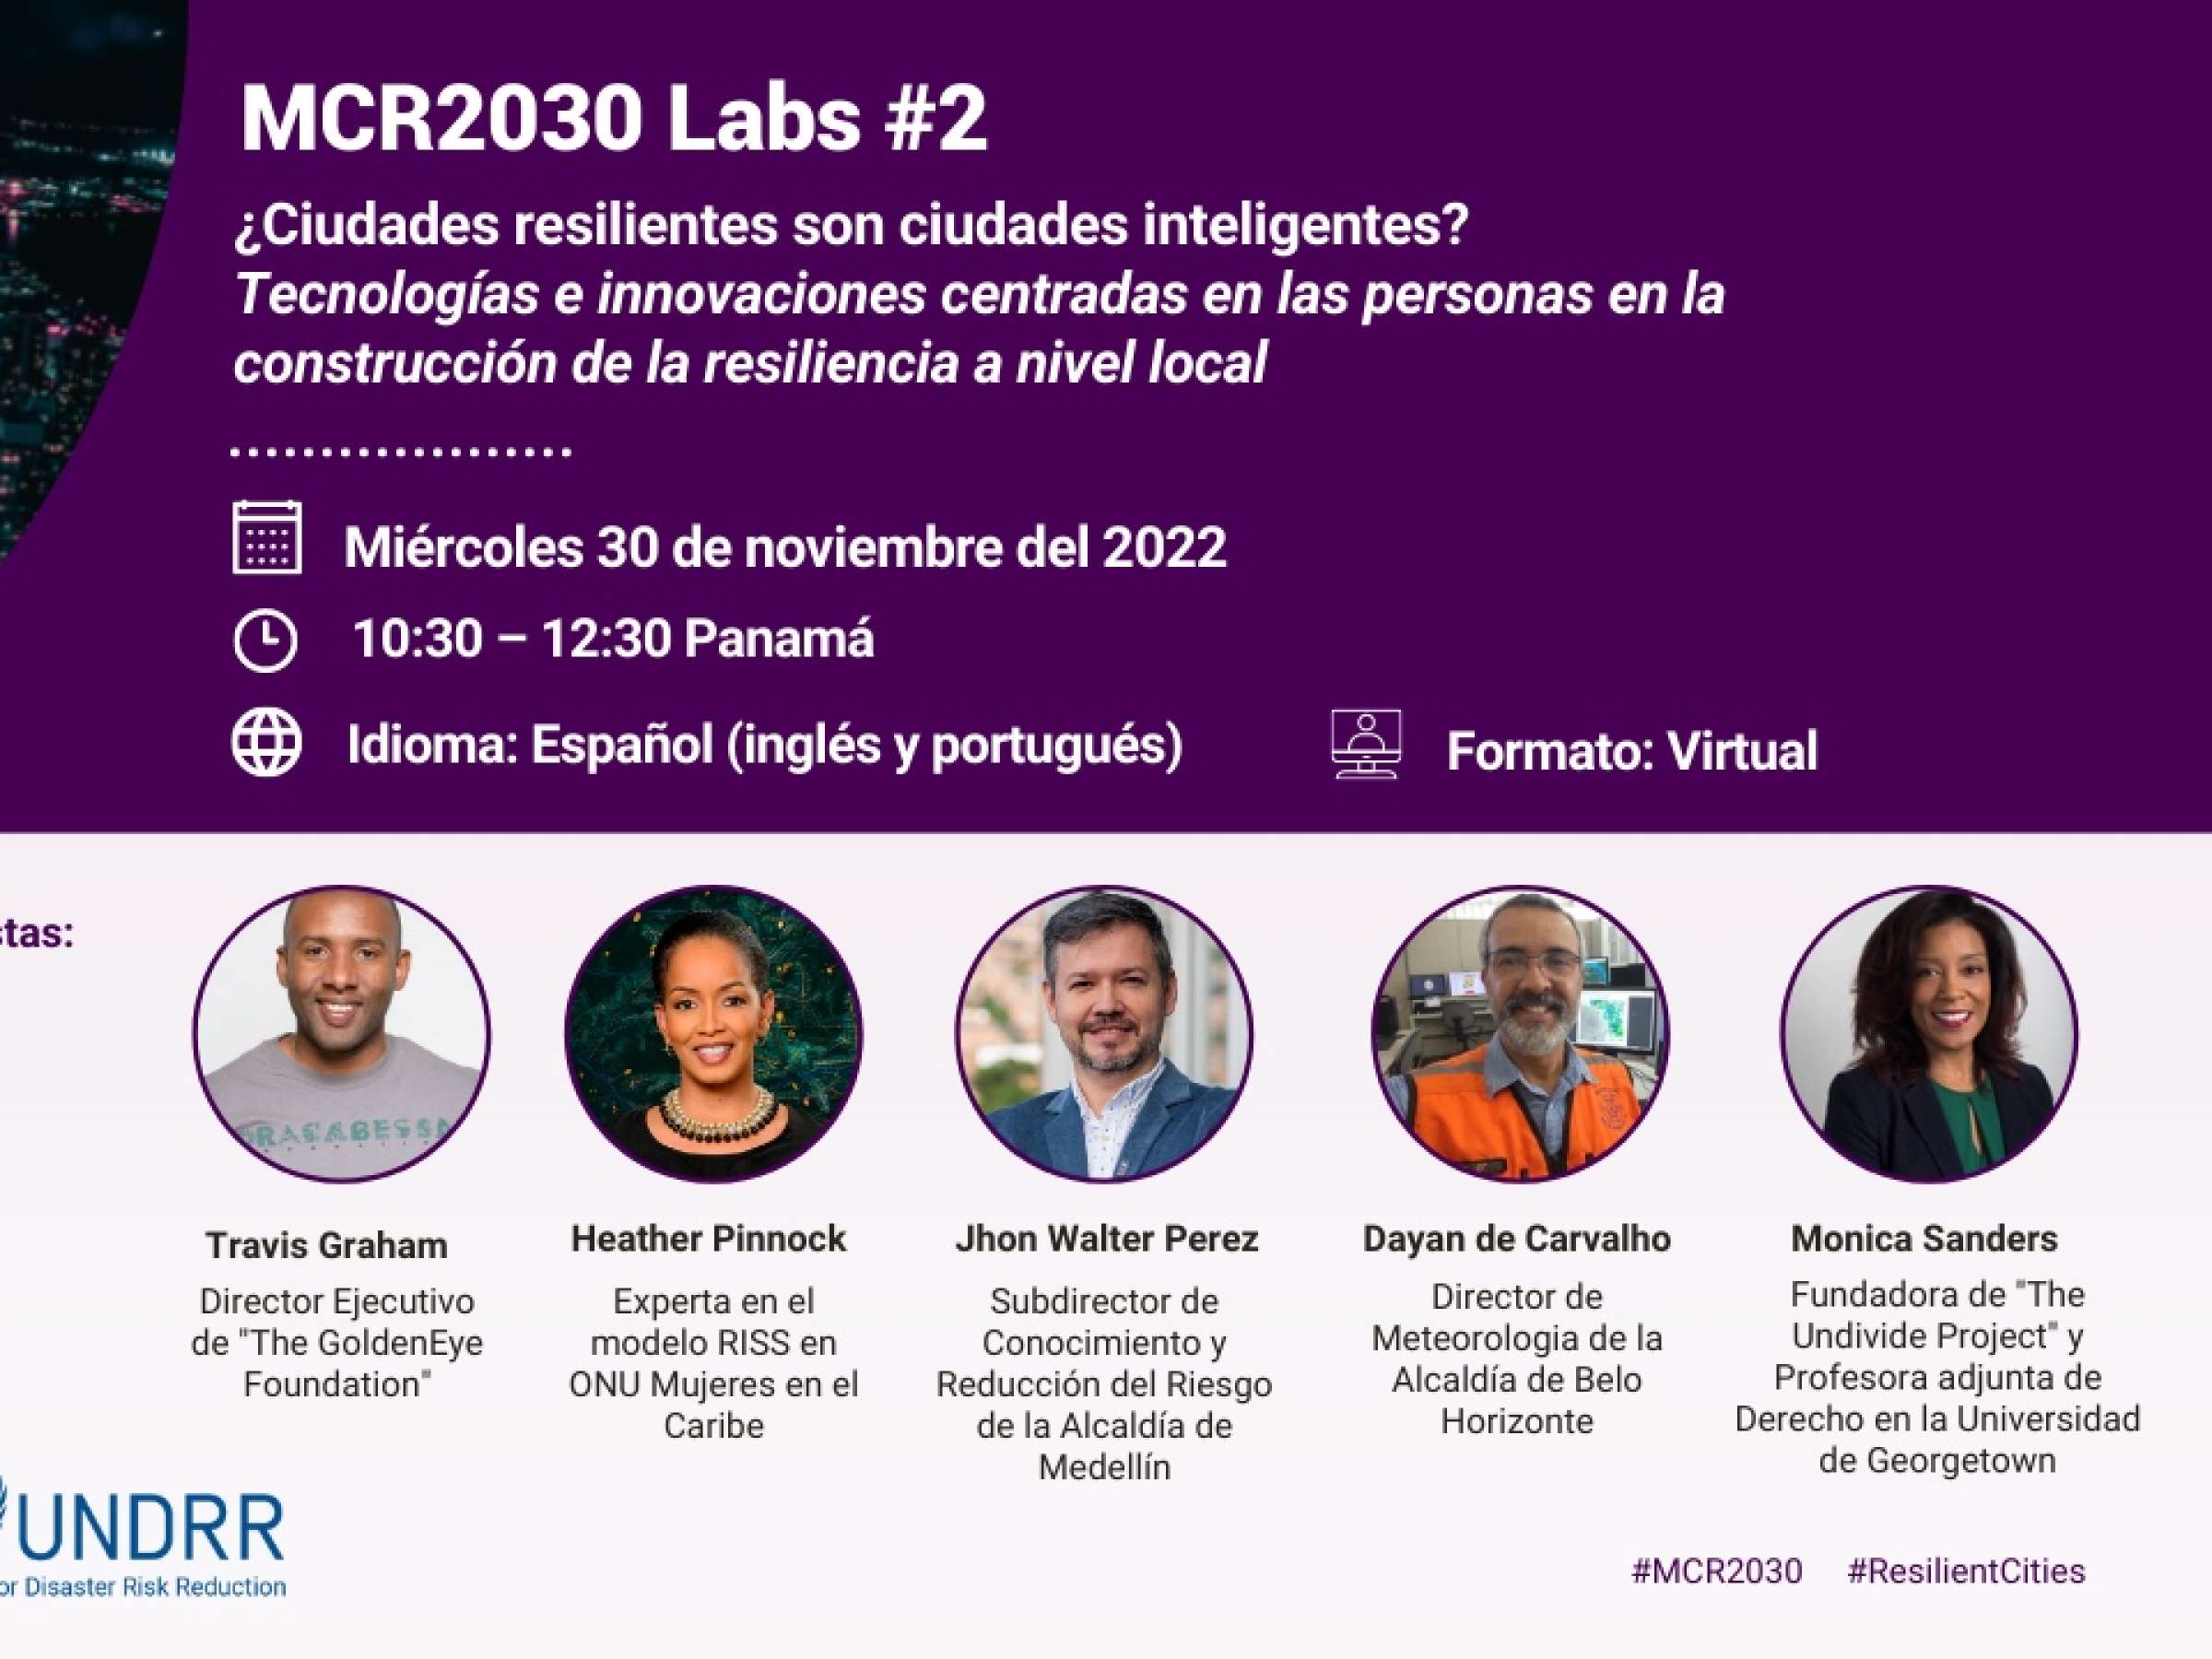 MCR2030 Labs second edition